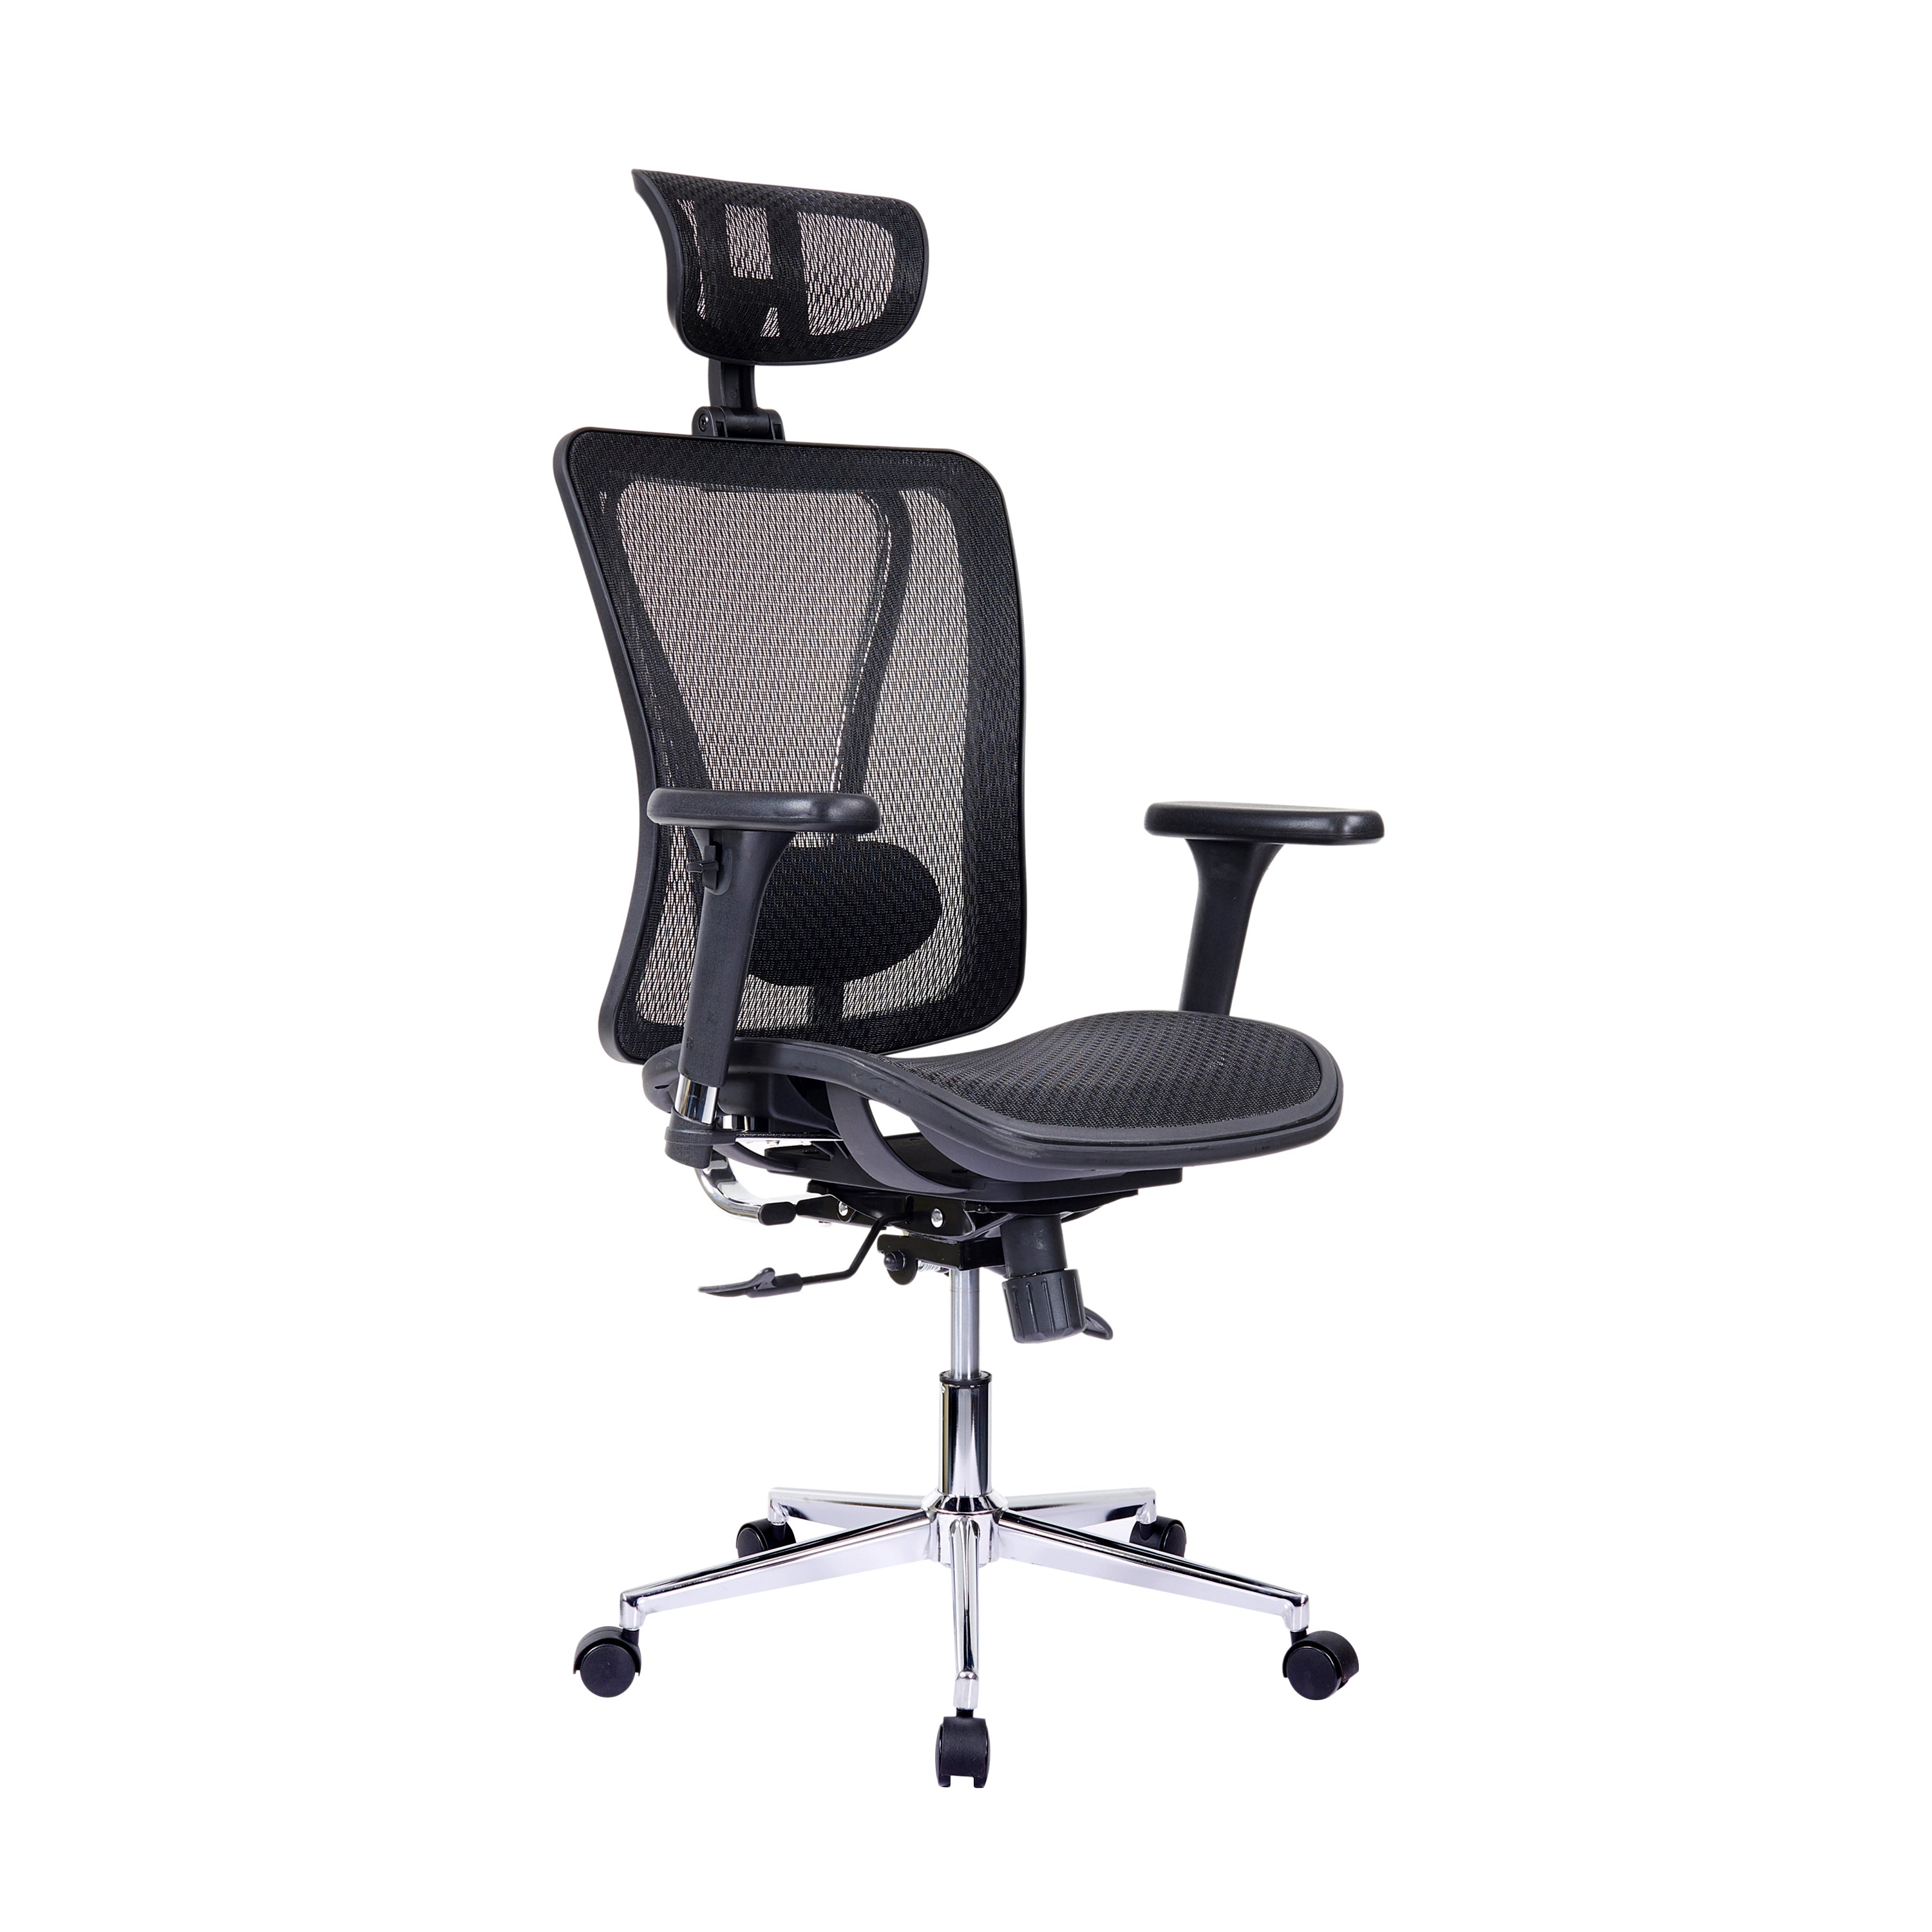 Lumbar Support for Your Office Chair - Air Lumbar